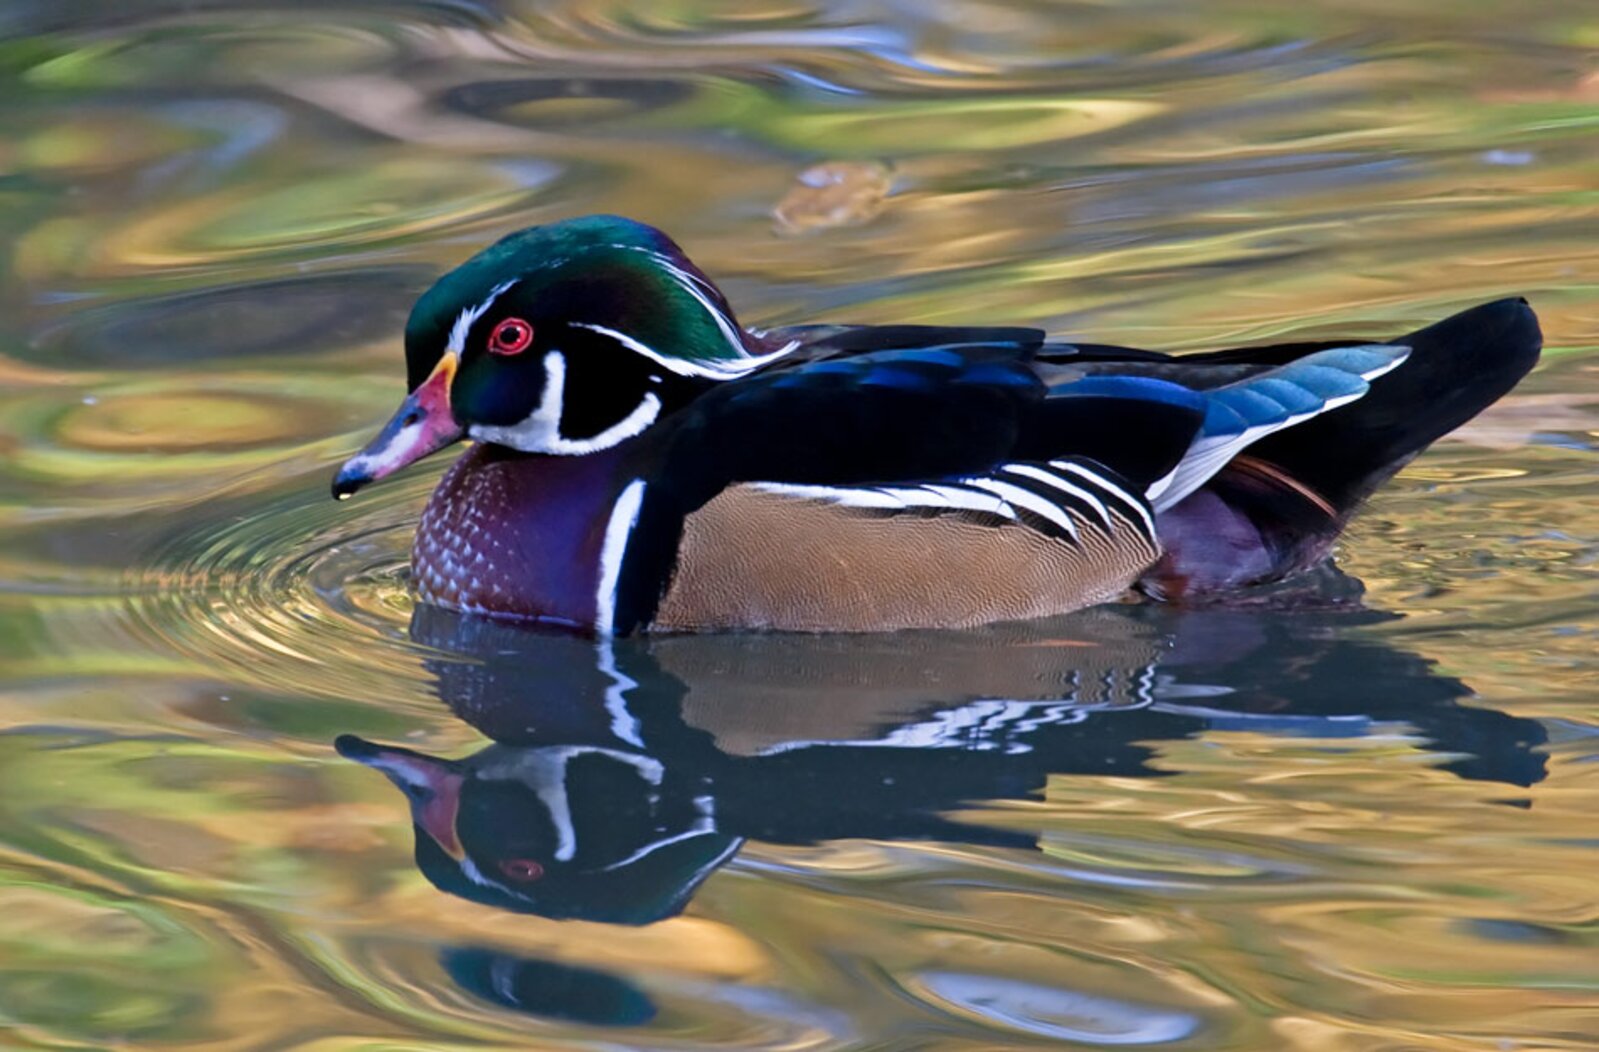 Check Crotona Lake for Wood Duck (here, a colorful drake). Photo: Laura Meyers